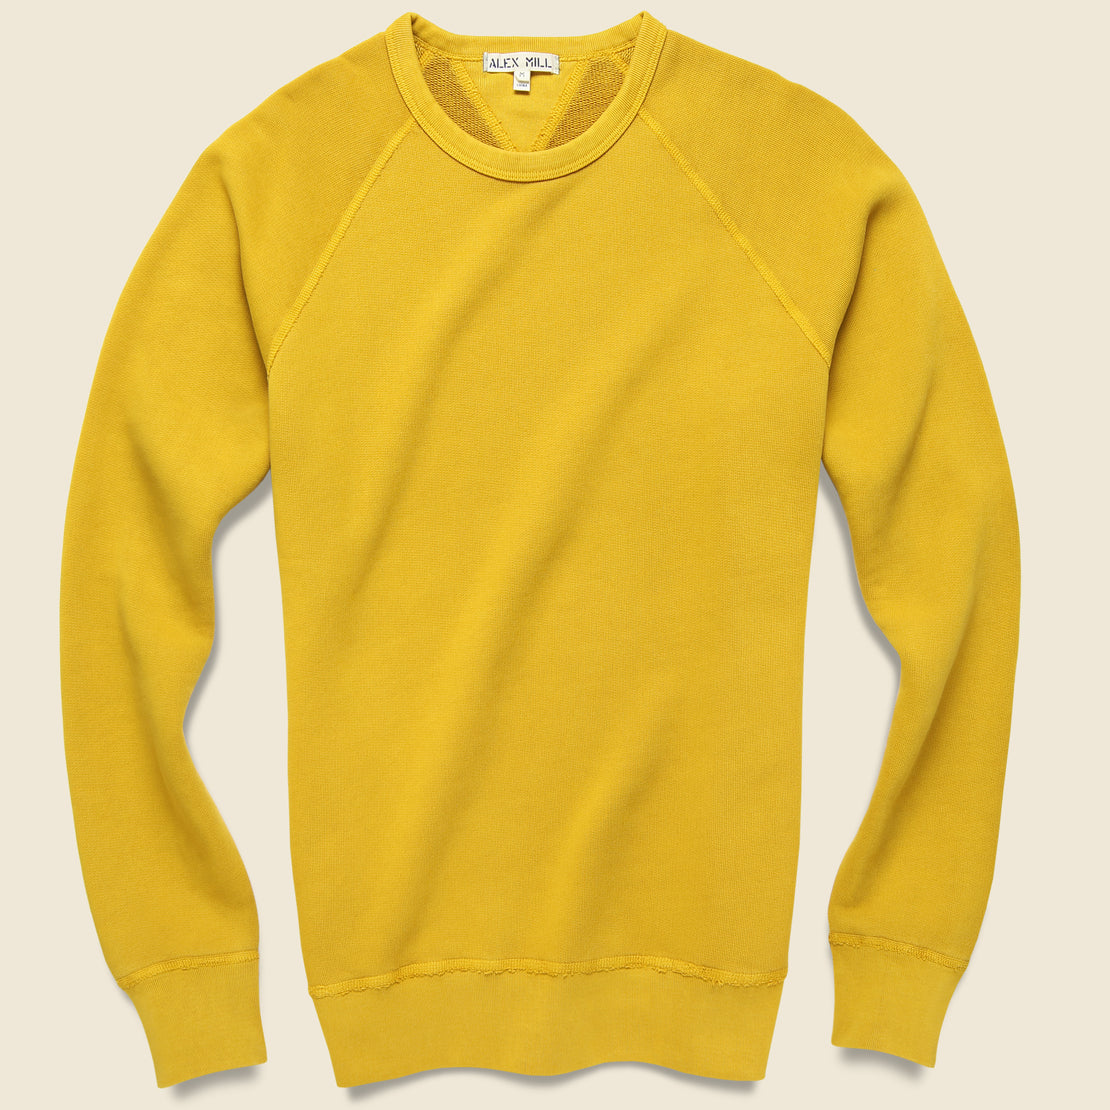 Alex Mill French Terry Sweatshirt - Honey Mustard